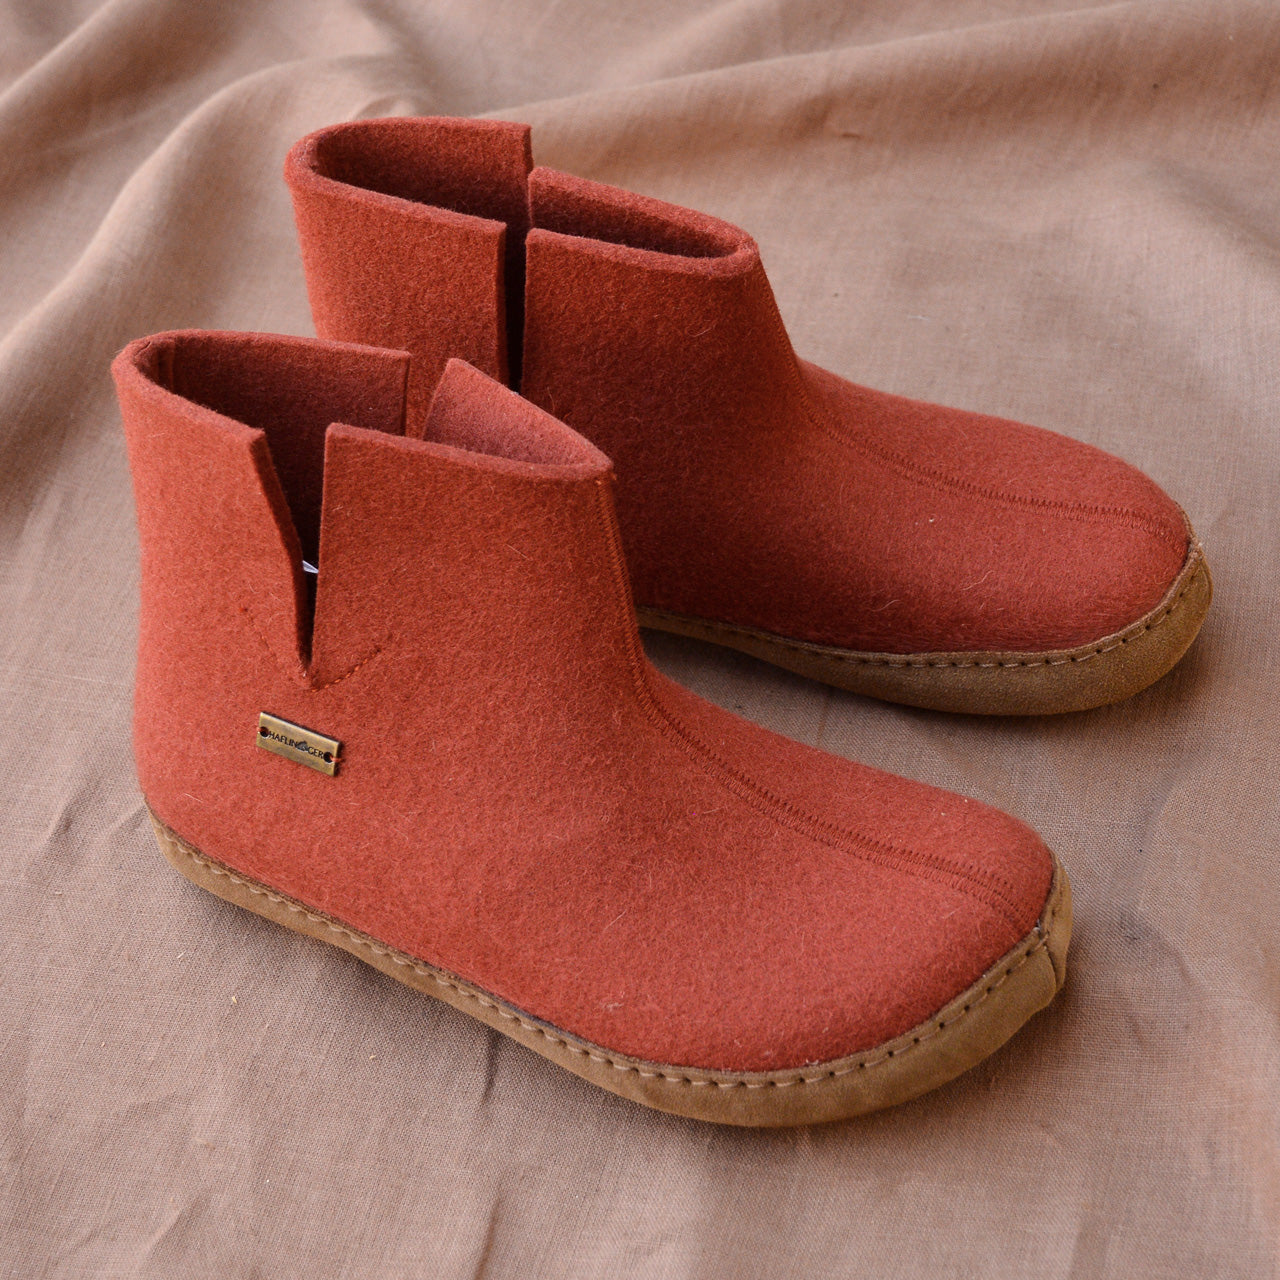 Wool Felt Slippers - Emil's Boots - Fox (Adults 36-42)